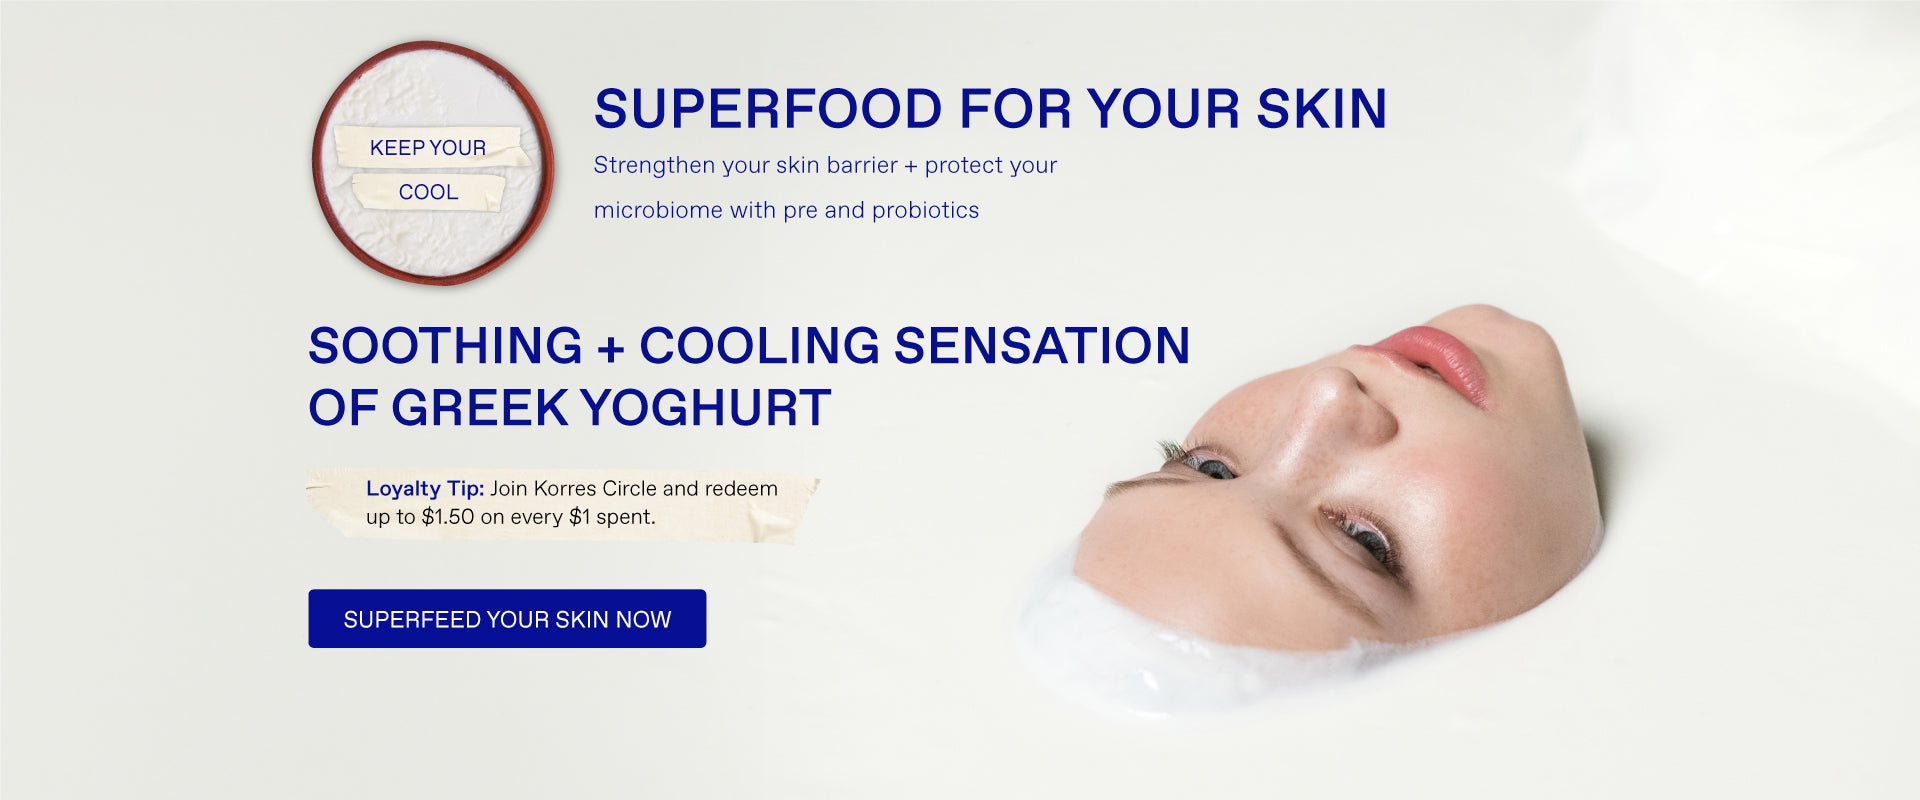 greek-yoghurt-superfood-for-your-skin